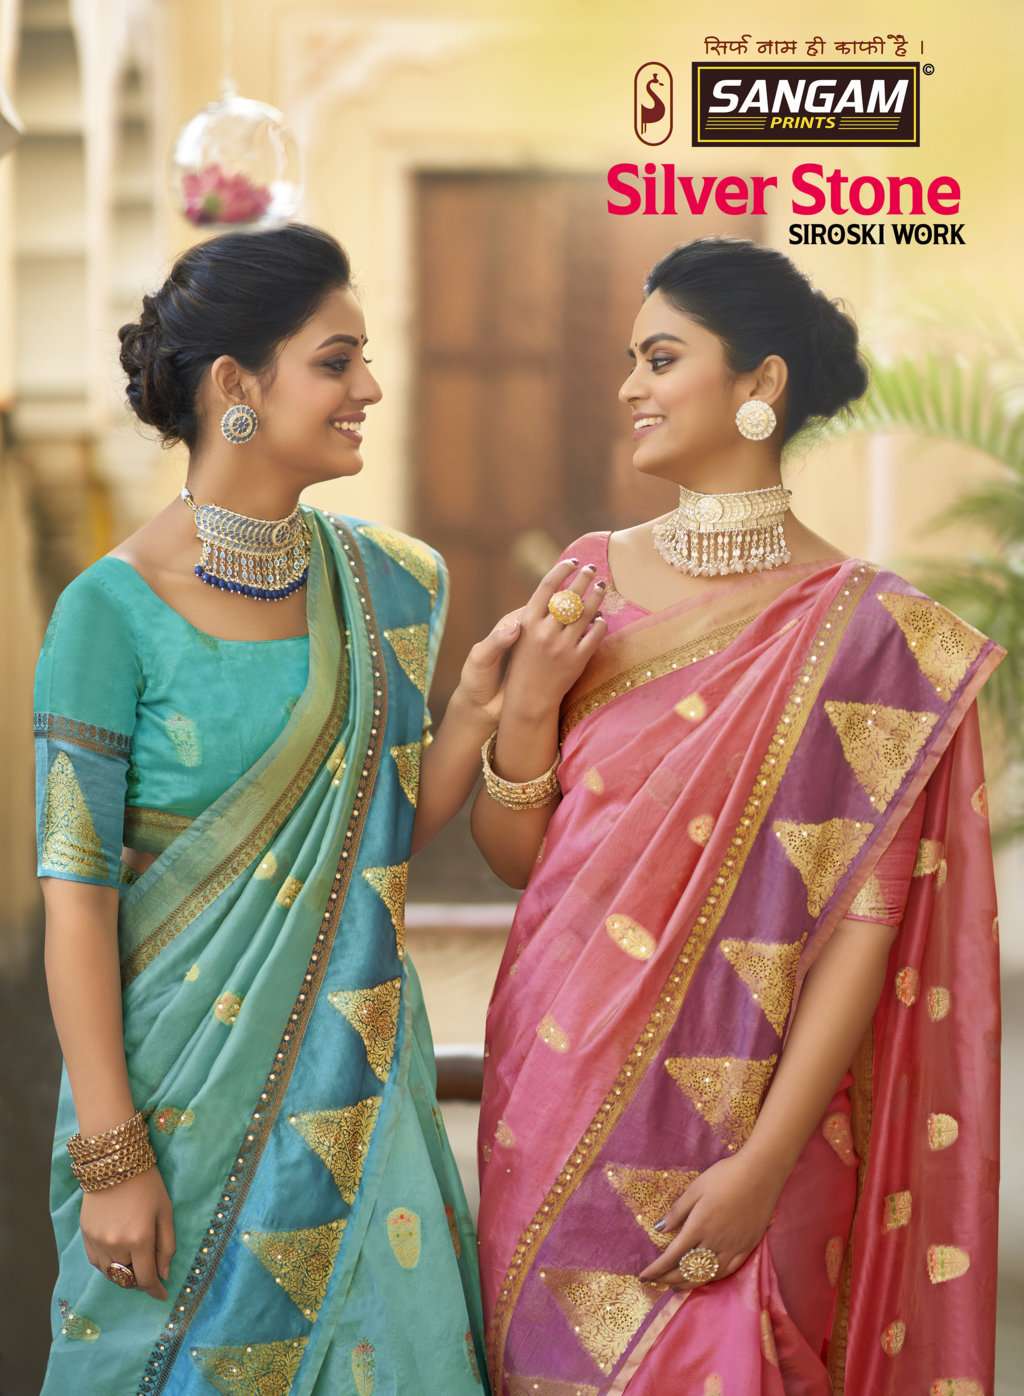 sangam prints silver stone siroski work silk saris wholesaler